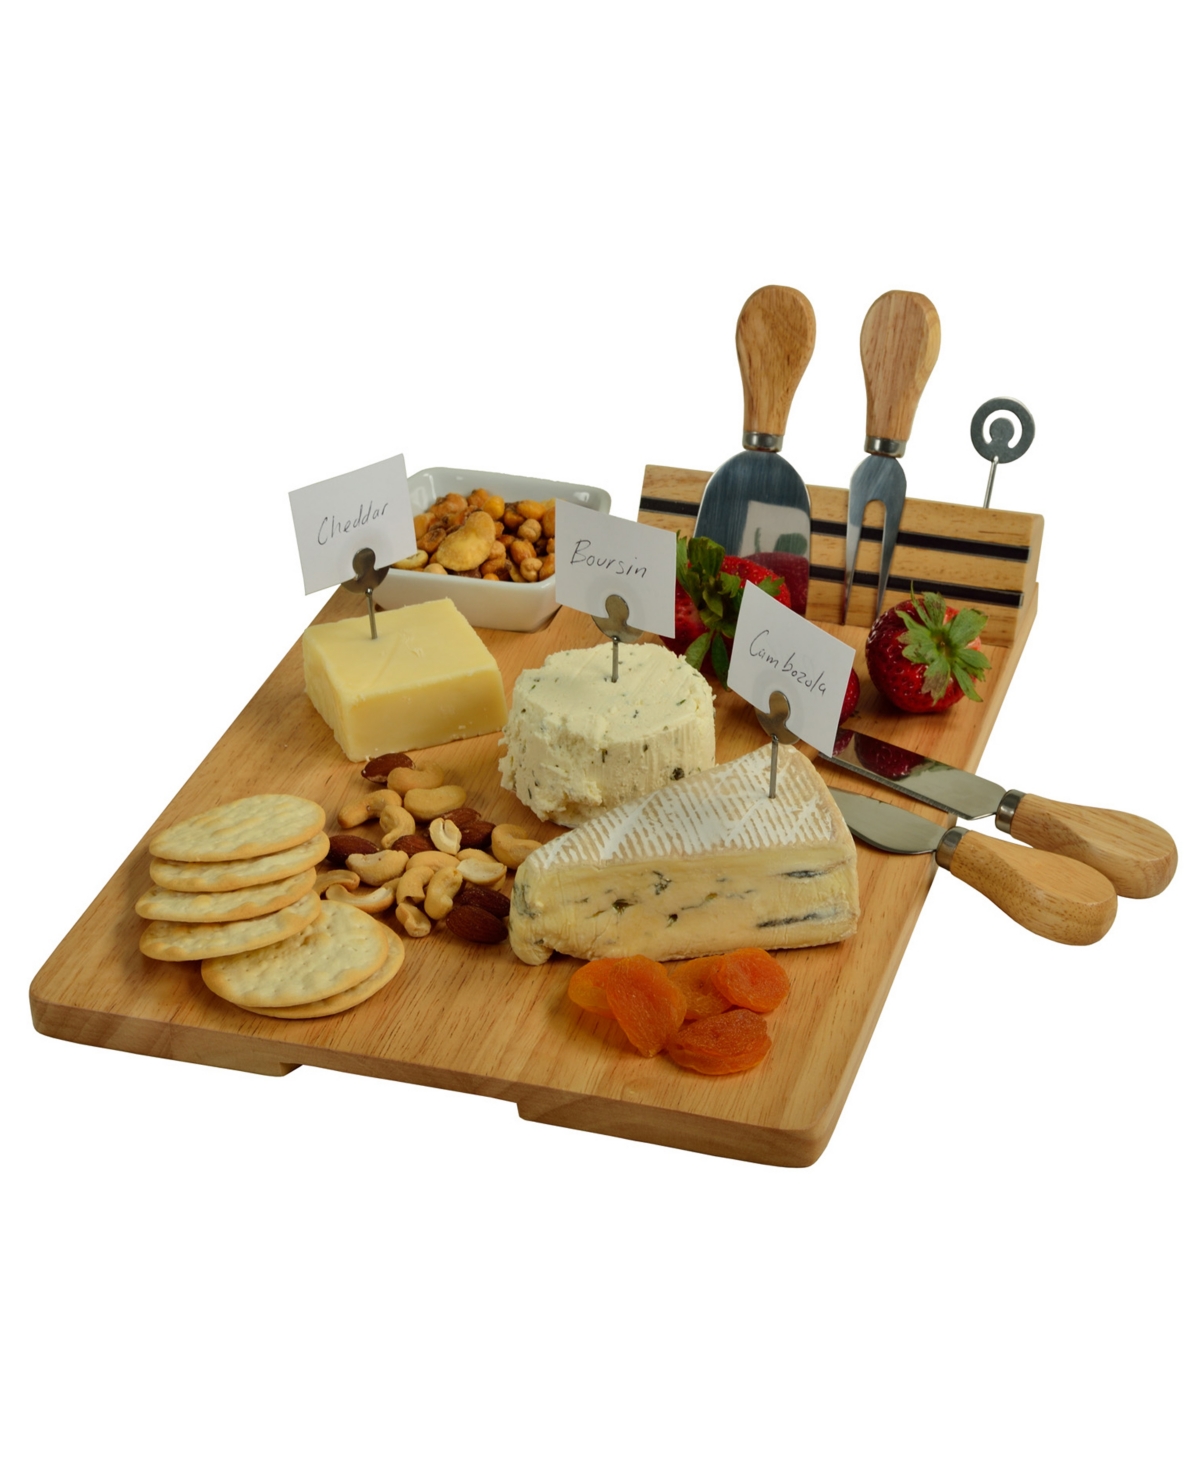 Windsor hardwood Cheese Board Set -Tools, Cheese Markers, Bowl - Natural